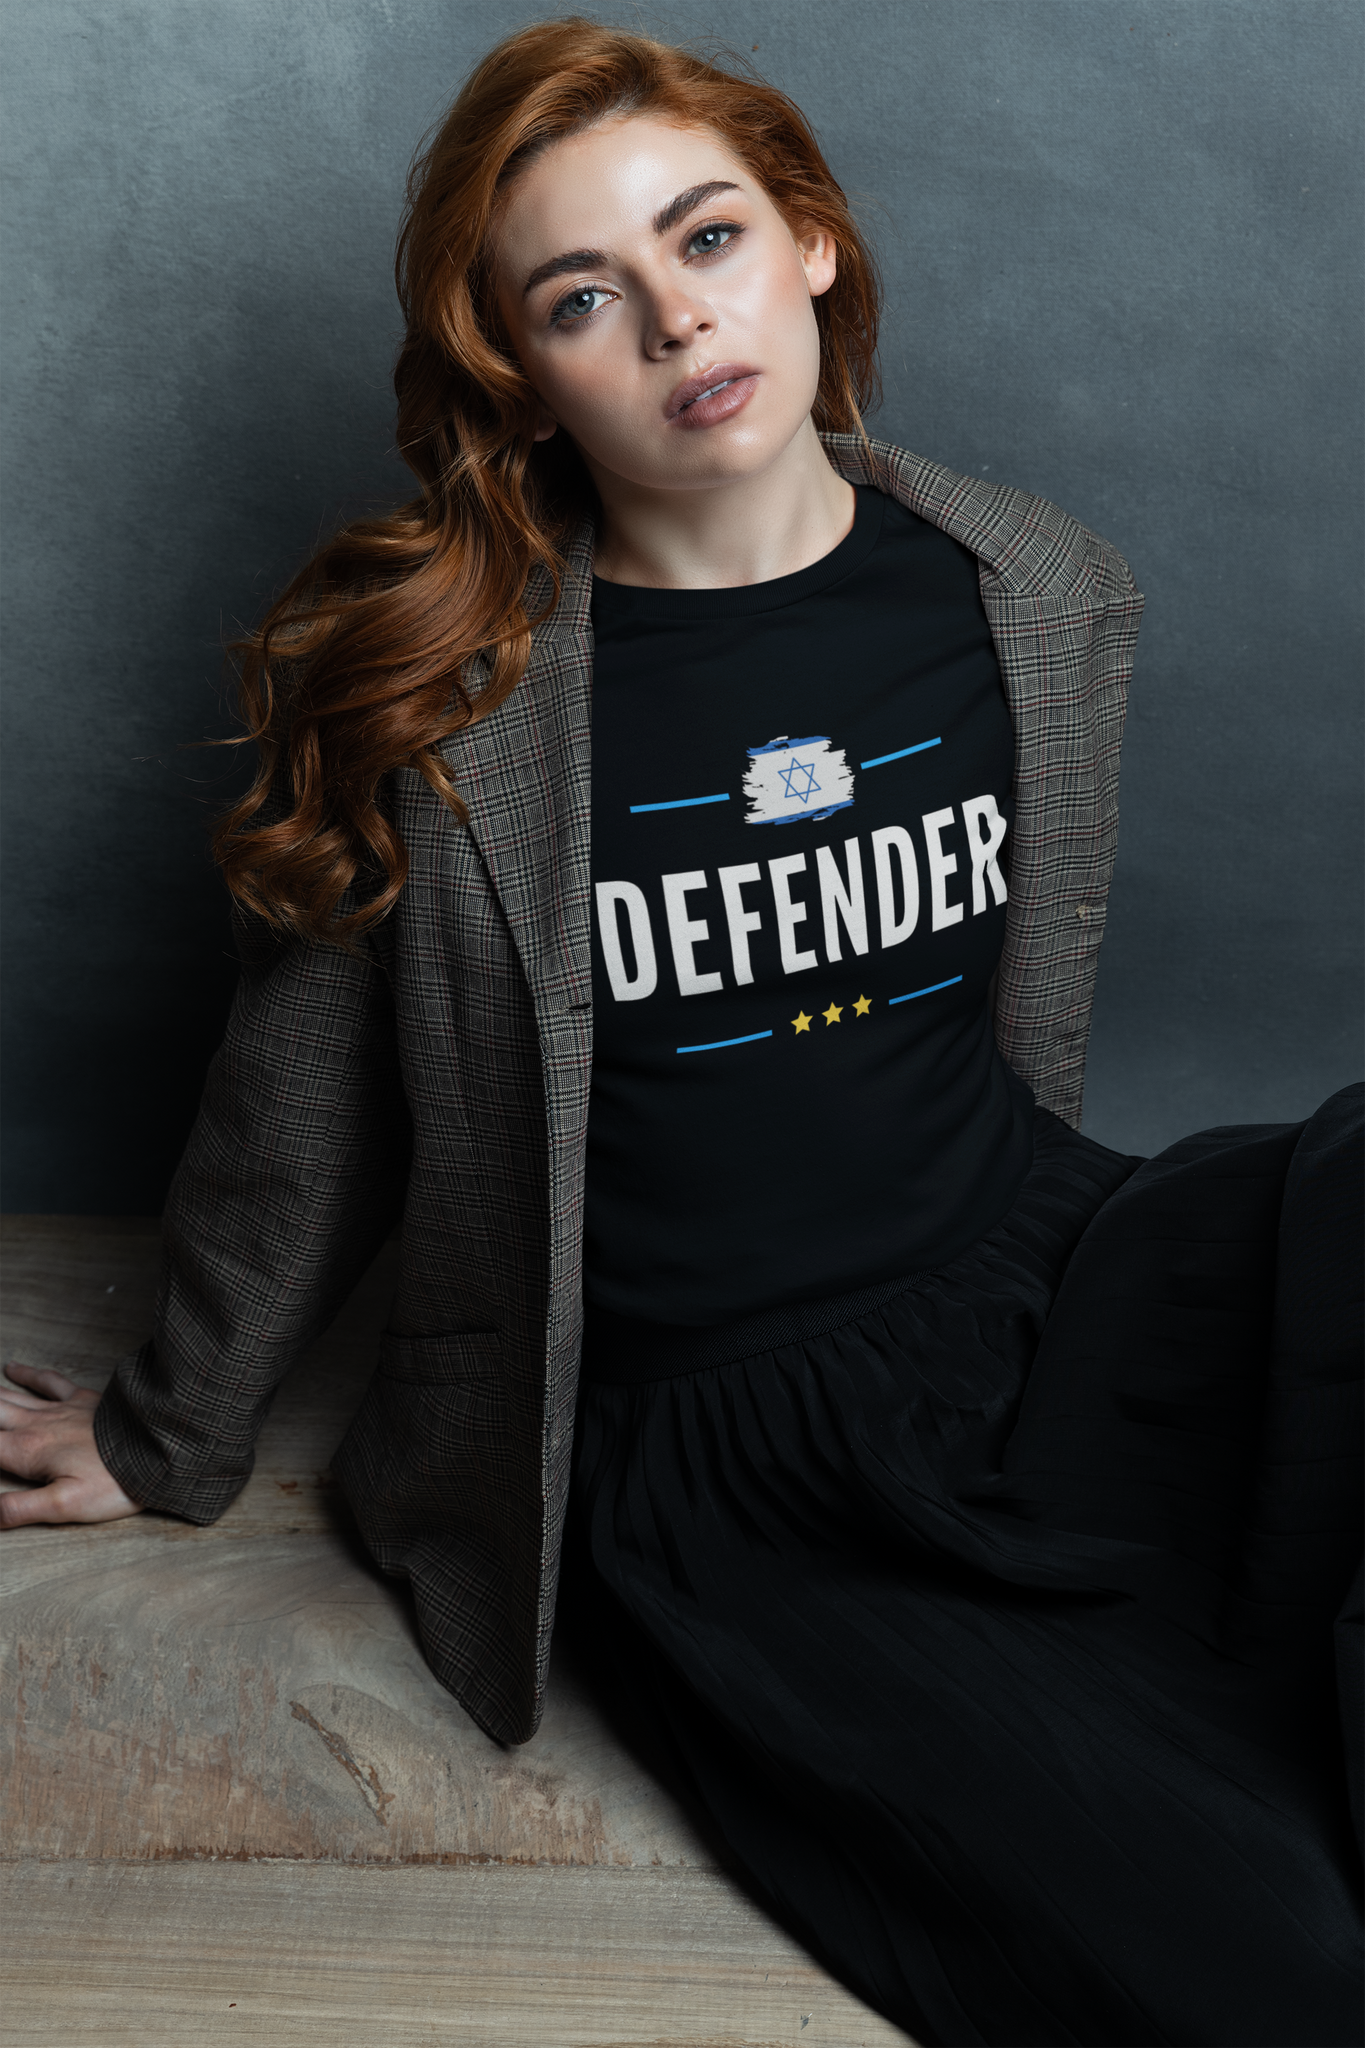 Israel Defender T-Shirt Women